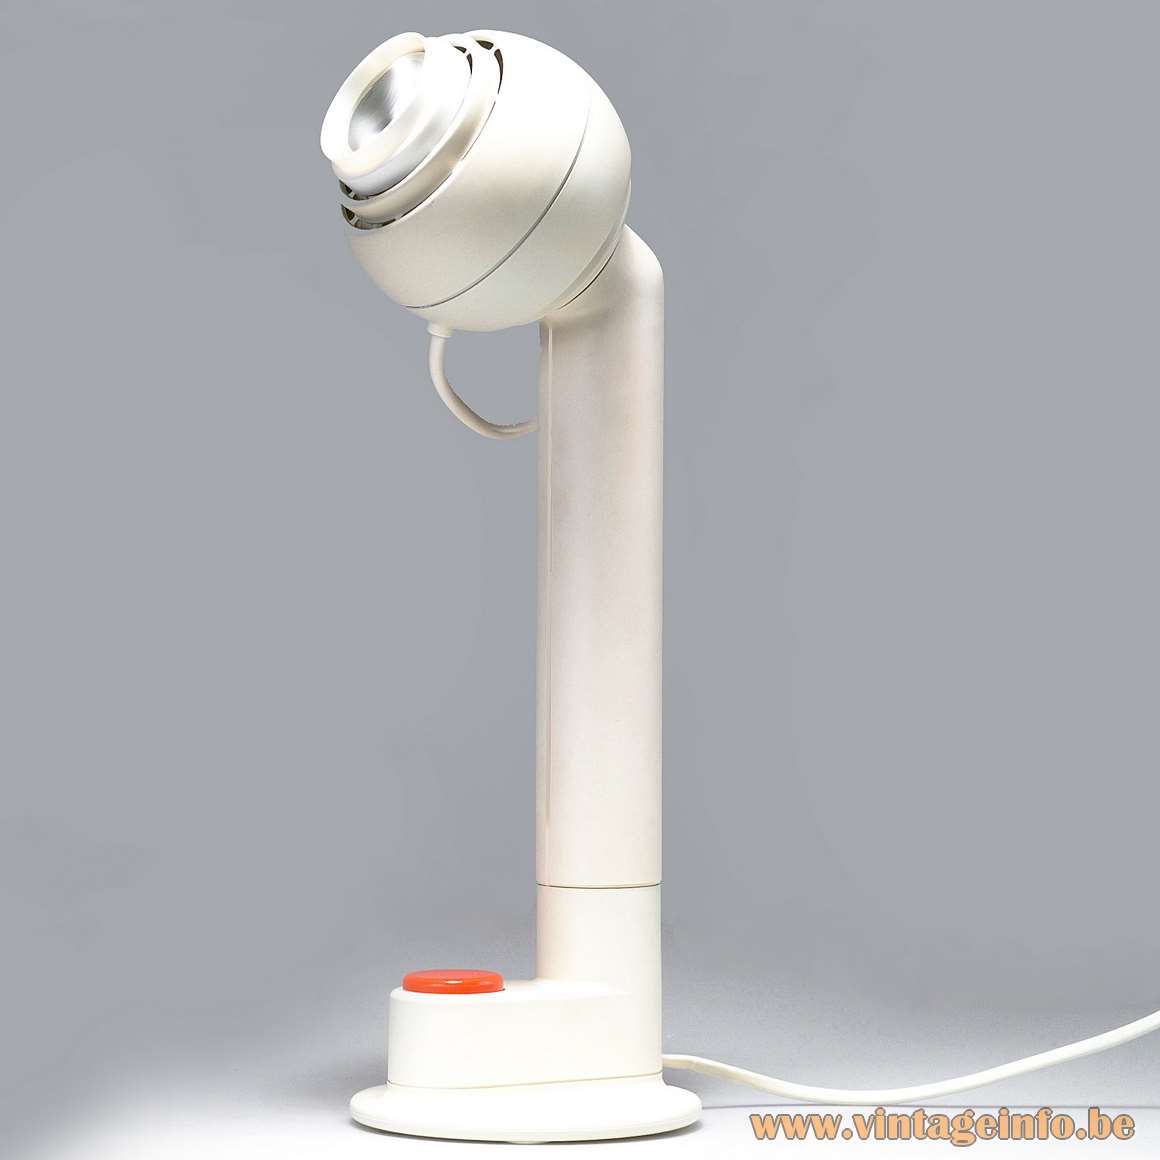 Osram Concentra Agilo Table Lamp white plastic magnetic globe orange round switch Schlagheck Schultes Design 1977